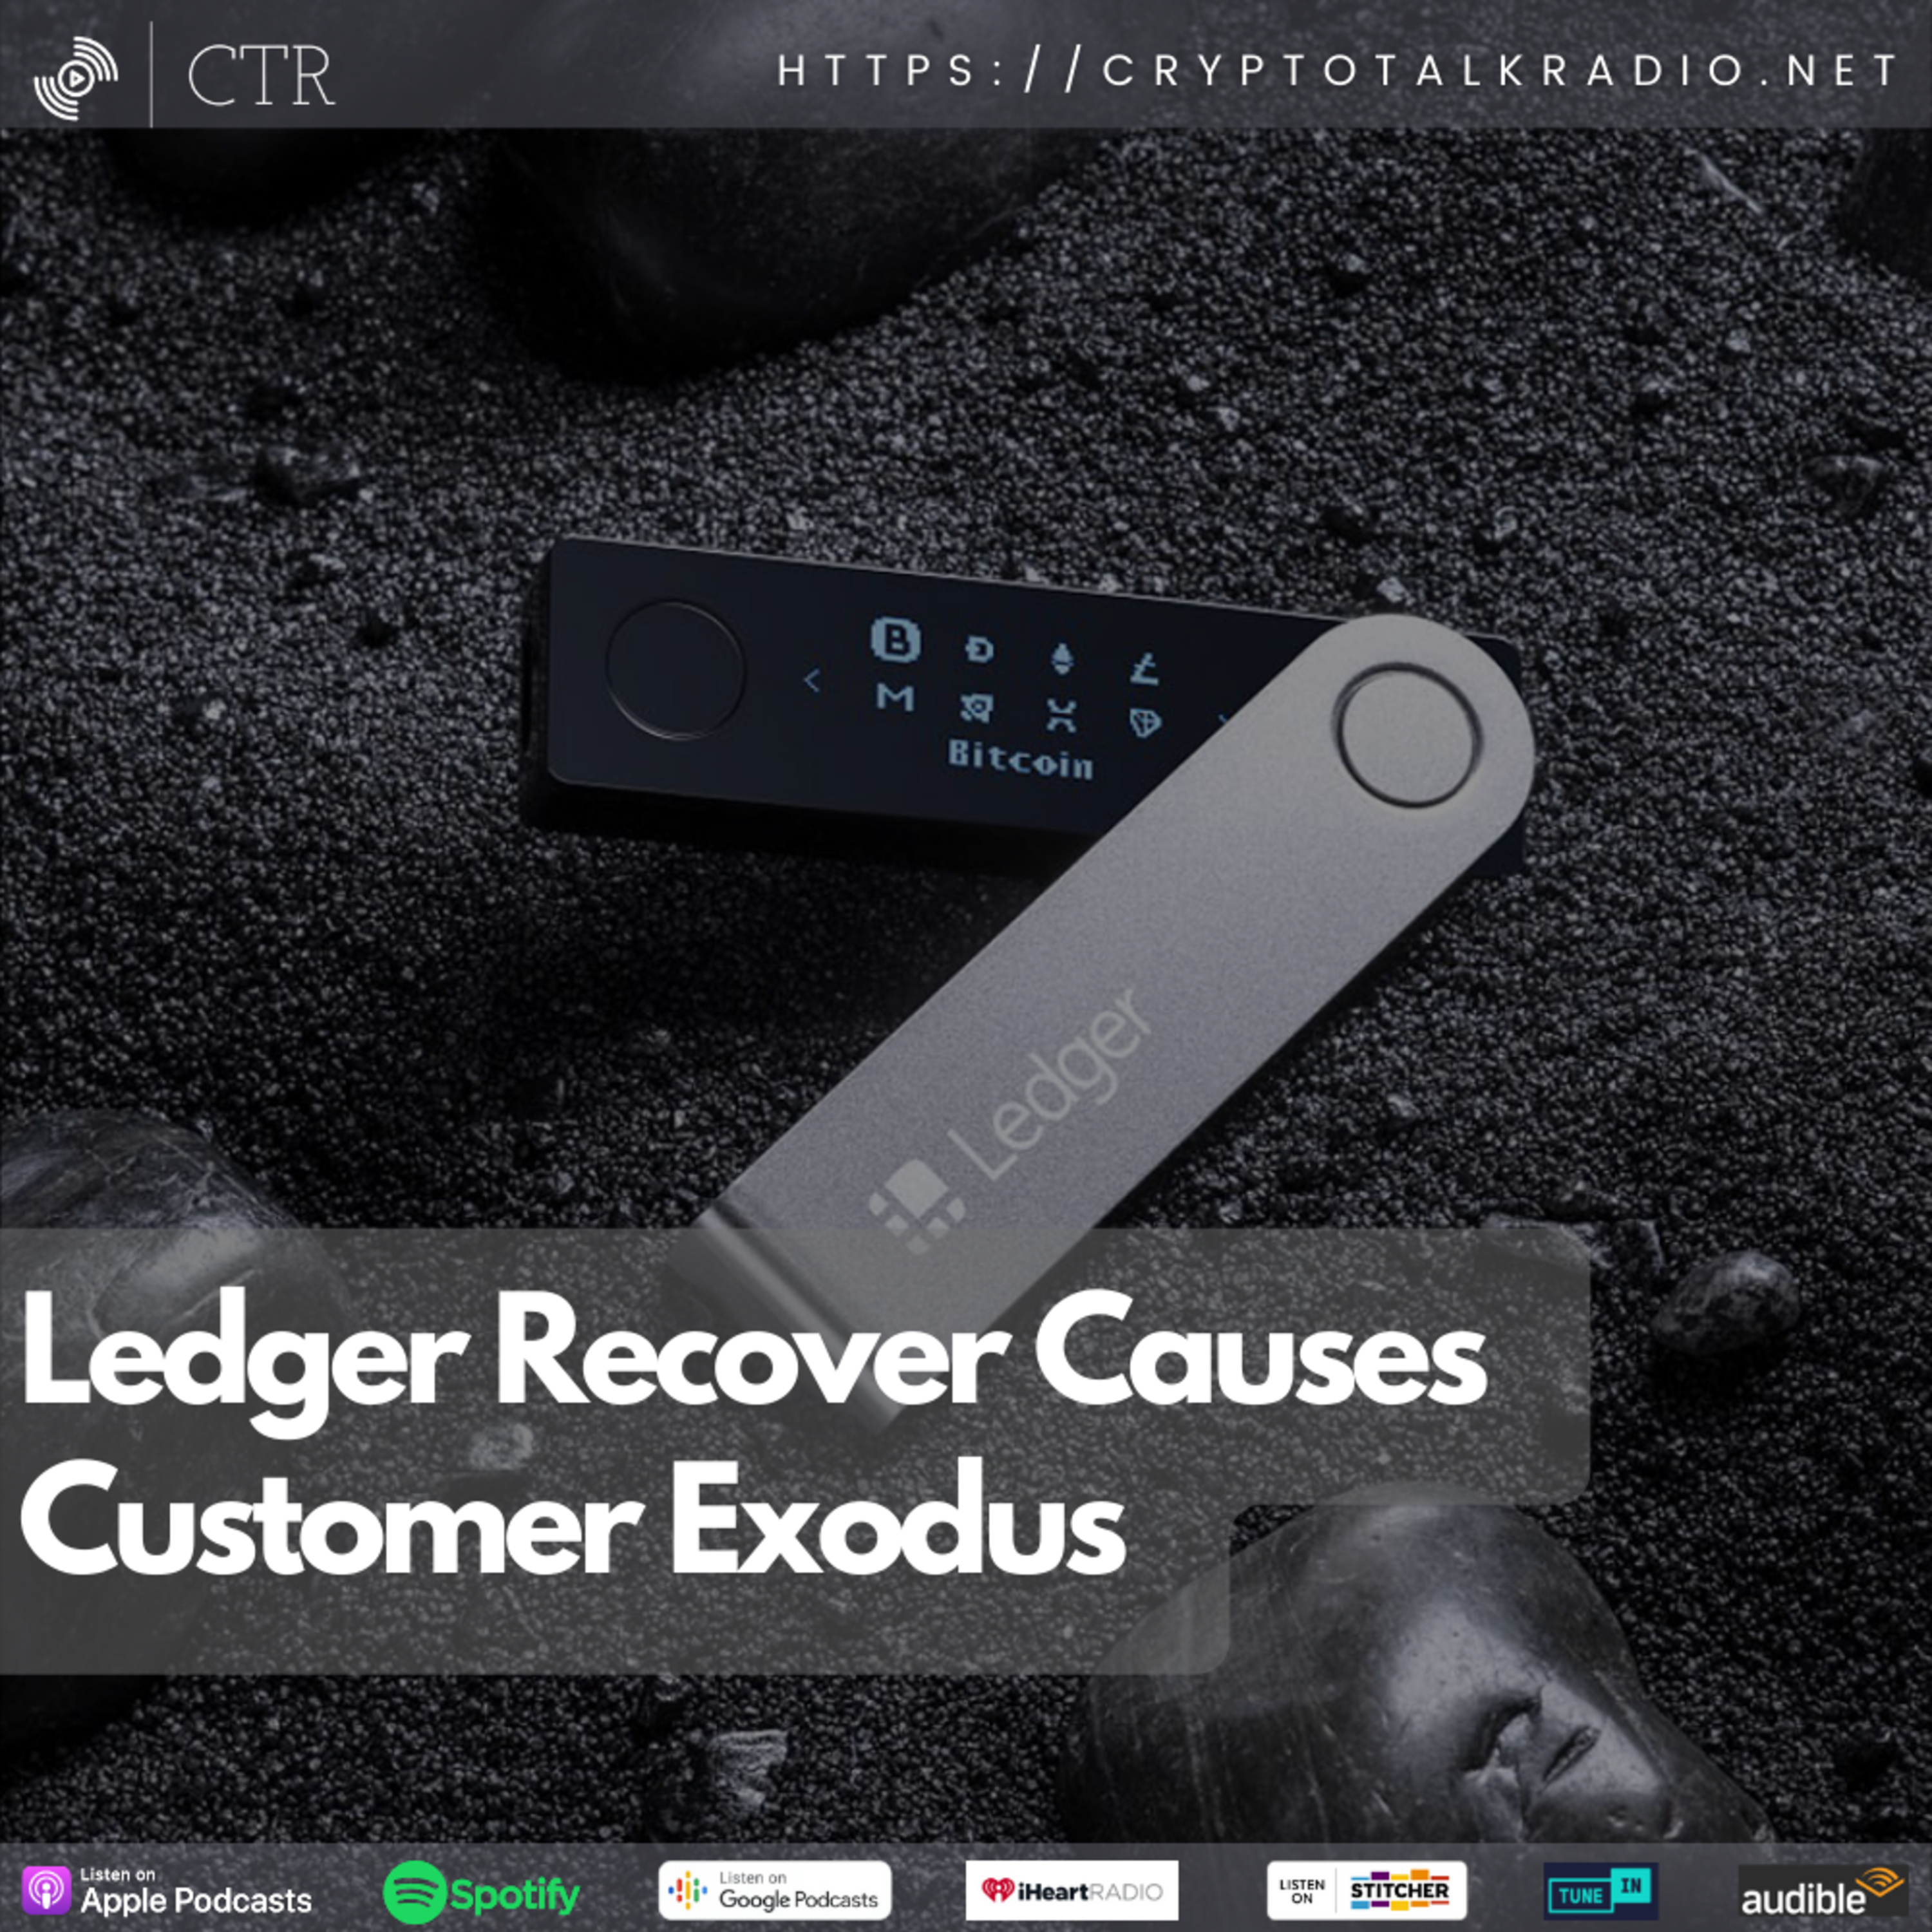 #Ledger Recover Causes Customer Exodus